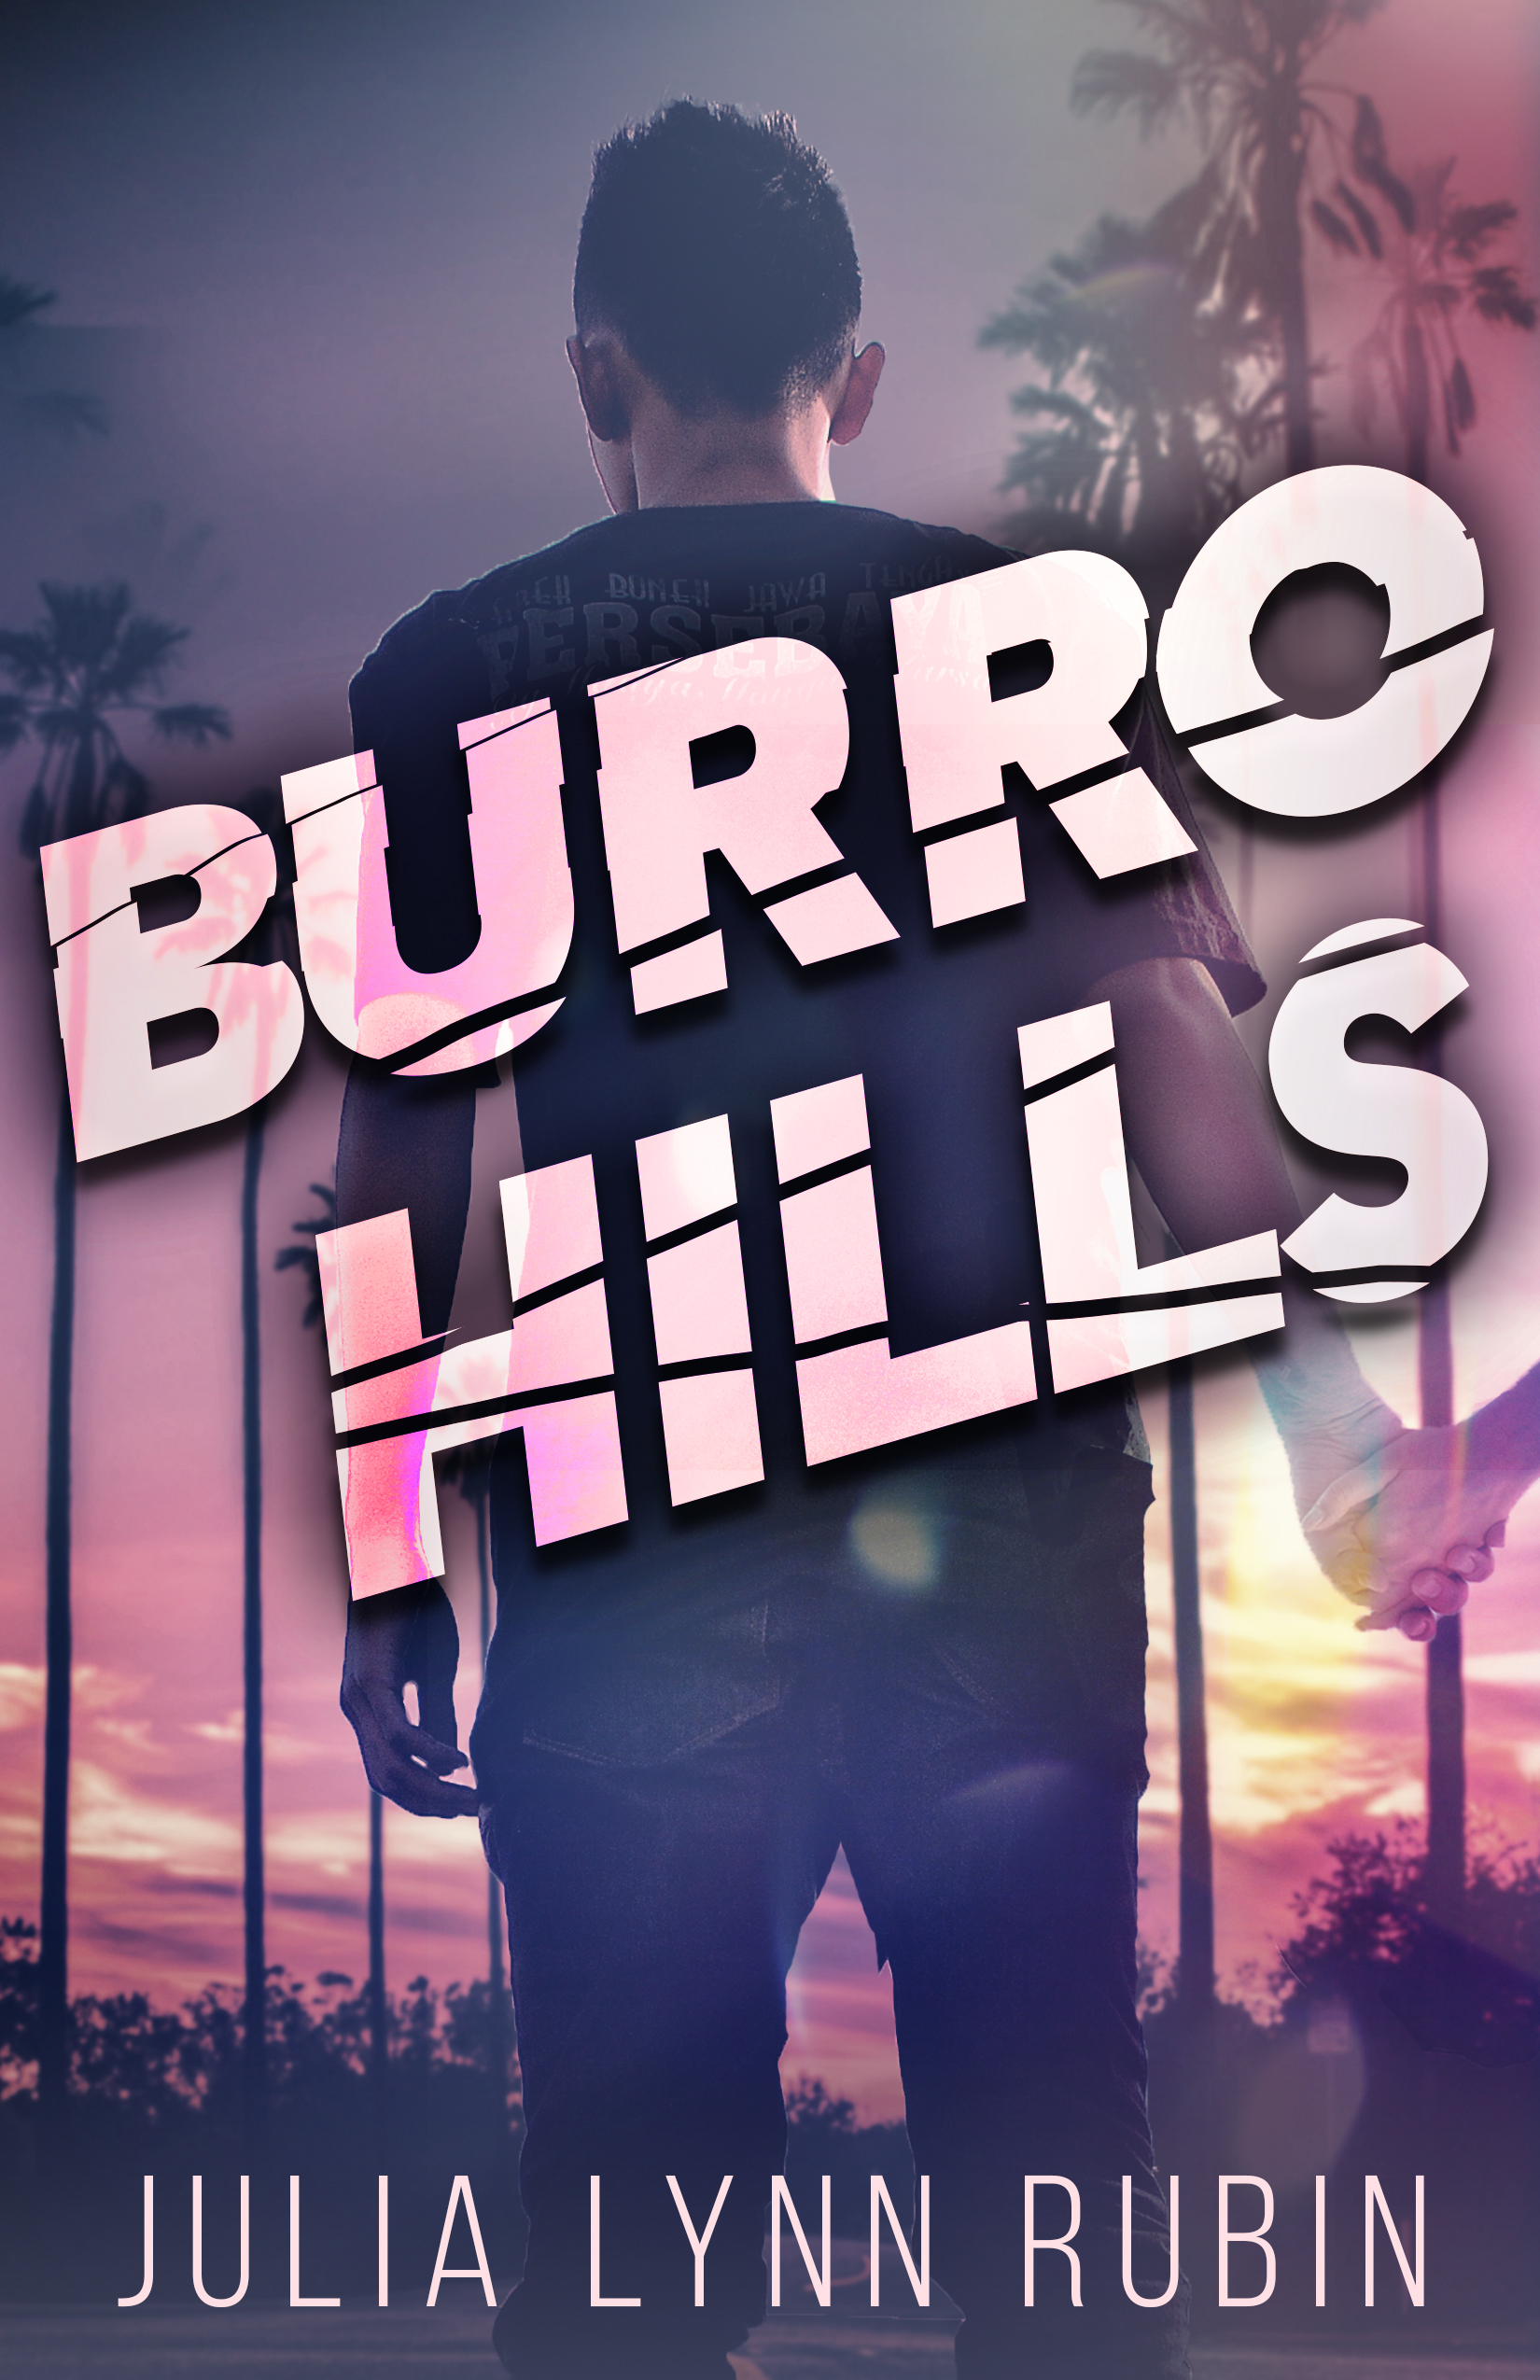 Book Launch: Burro Hills by Julia Lynn Rubin